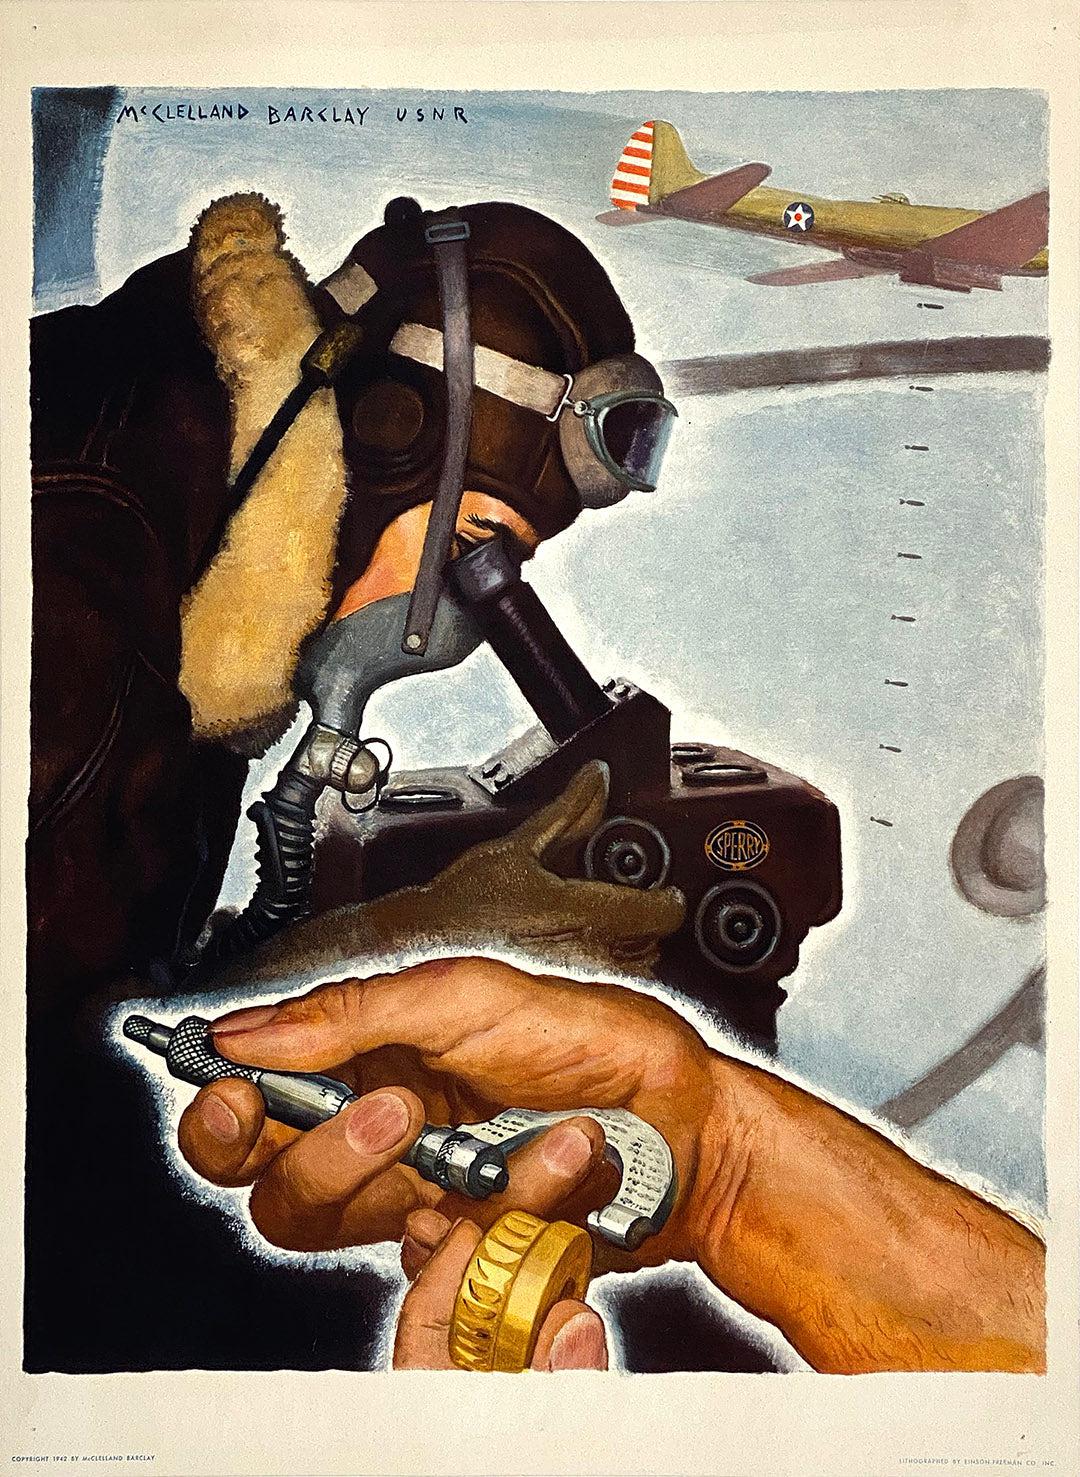 Original Vintage WWII Poster Pilot McClelland Barclay 1942